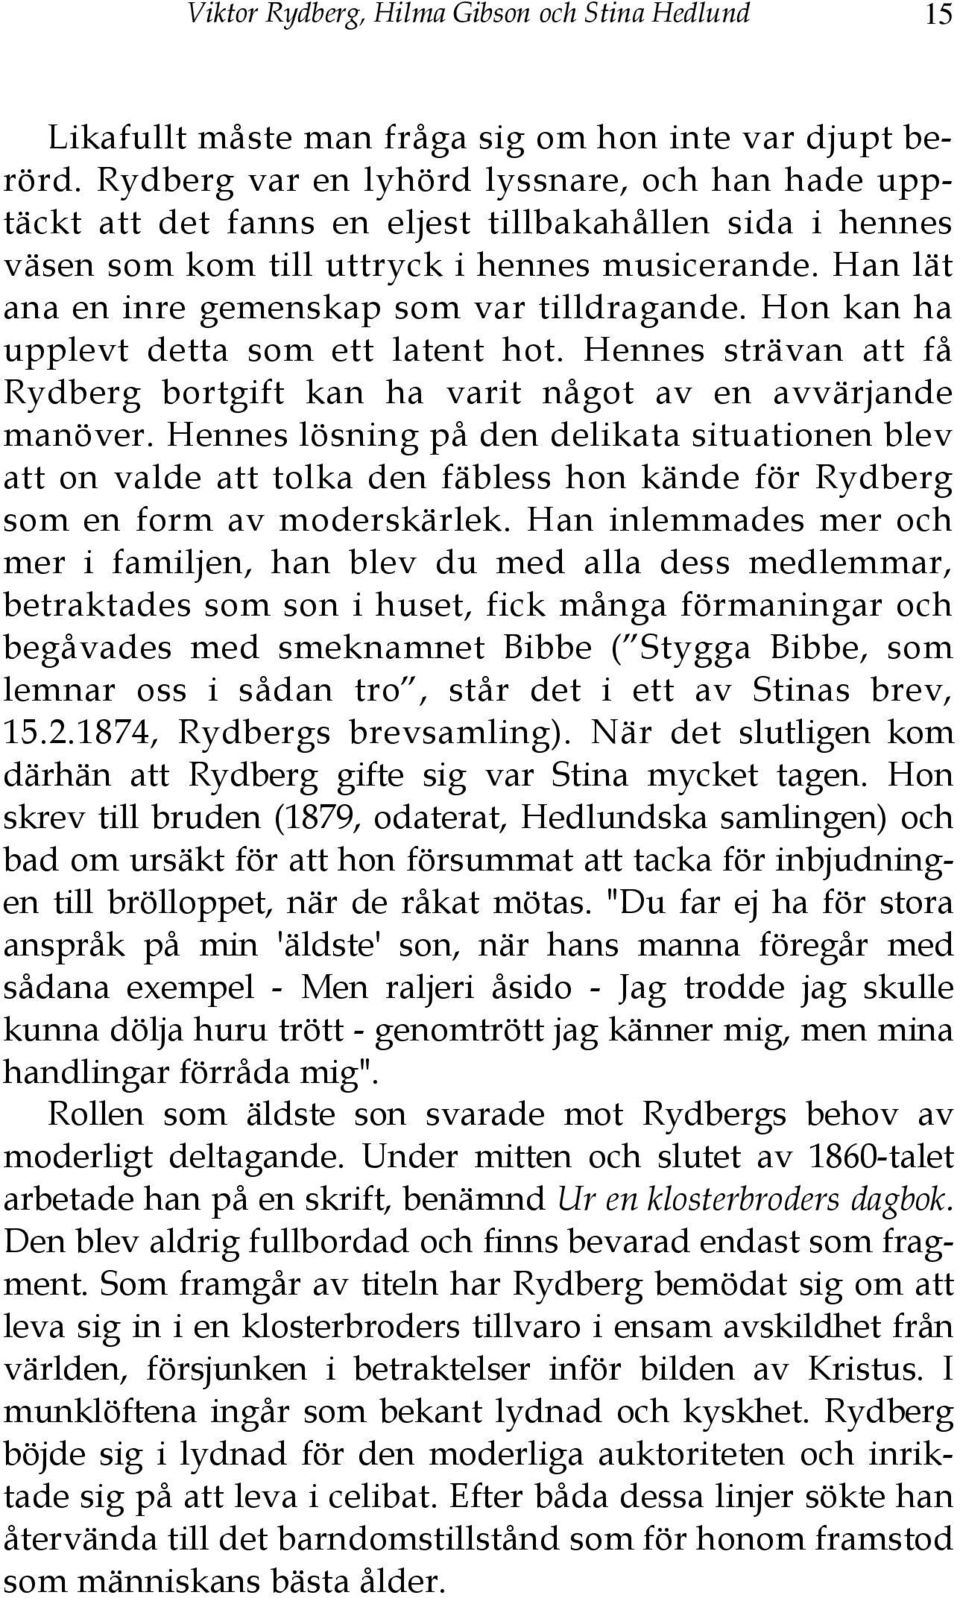 Viktor Rydberg, Hilma Gibson och Stina Hedlund - PDF Free Download